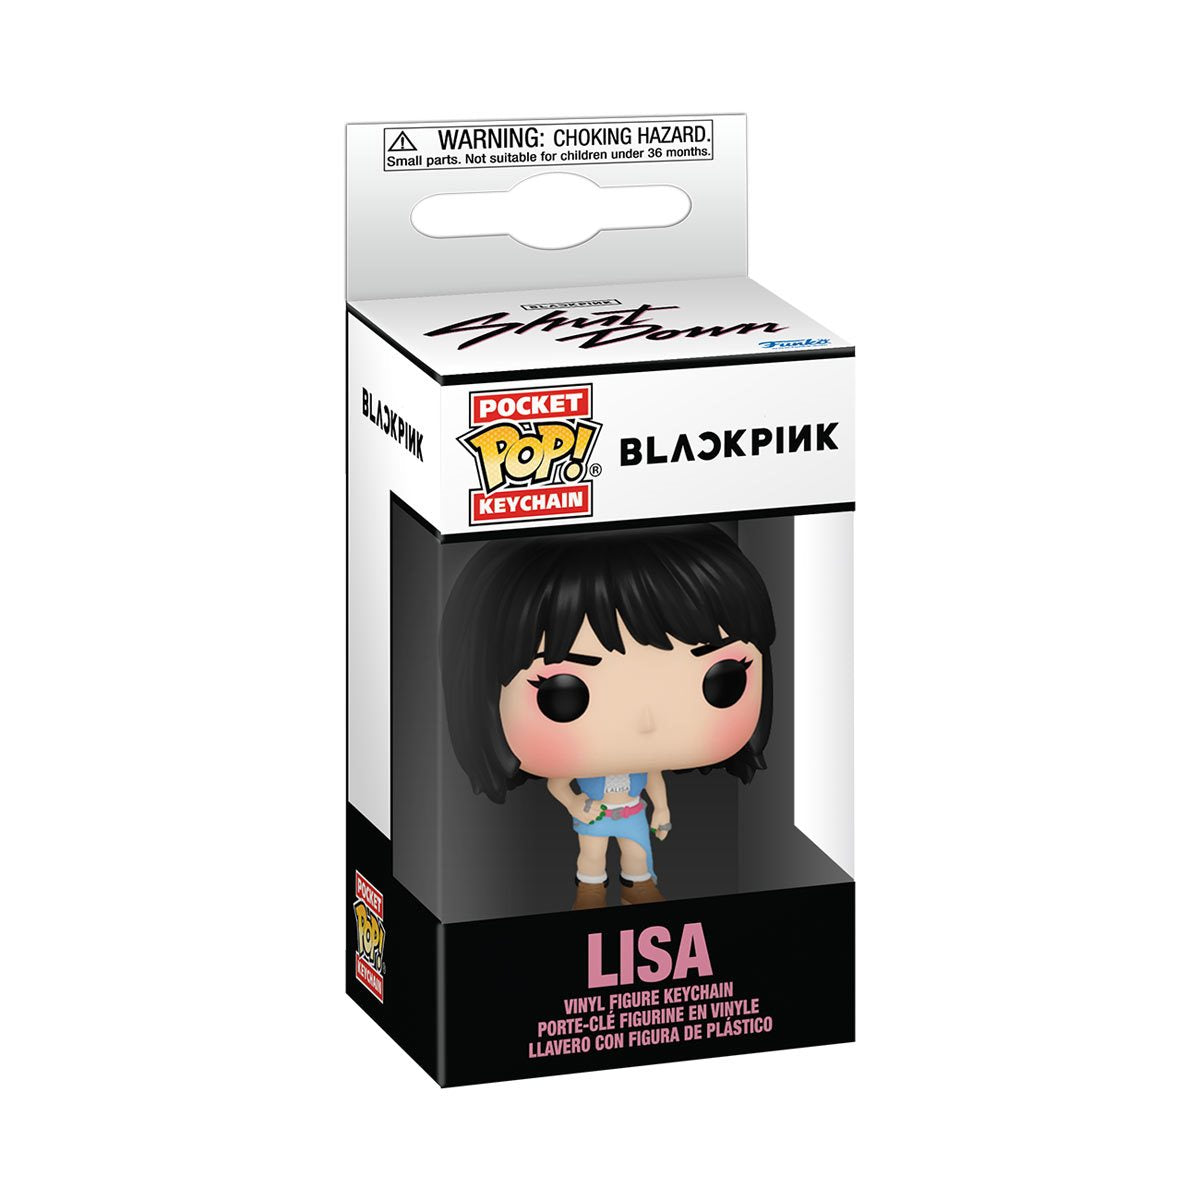 BLACKPINK LISA POCKET POP! KEY CHAIN